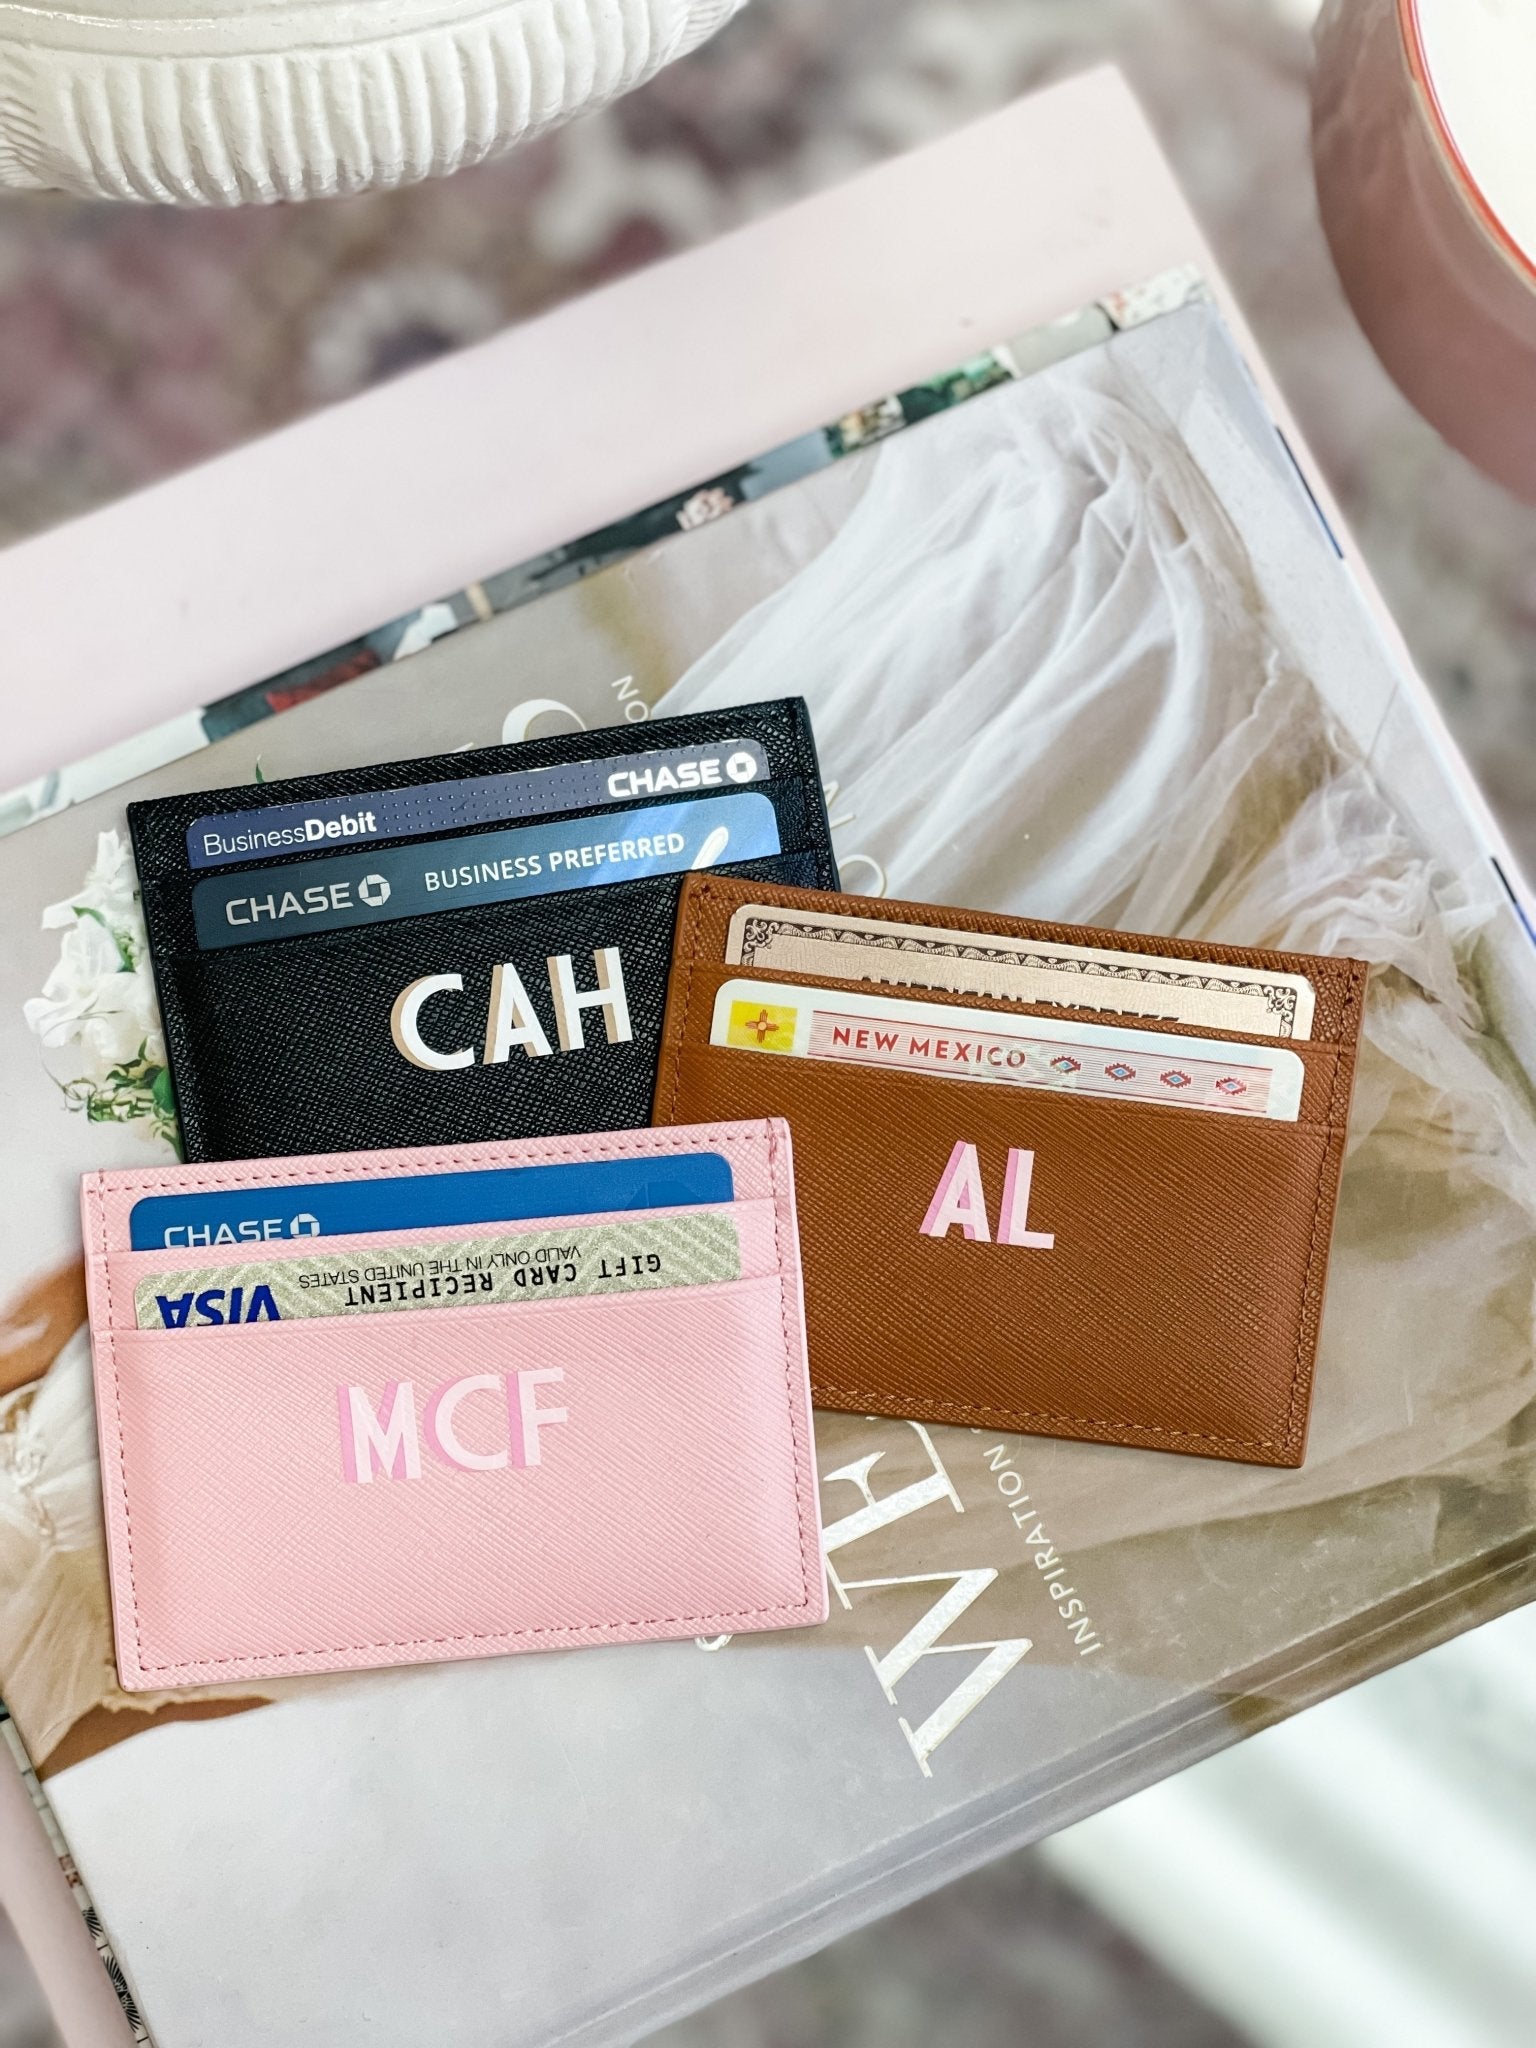 Monogram Purse Personalised Card Holder Women's Wallet